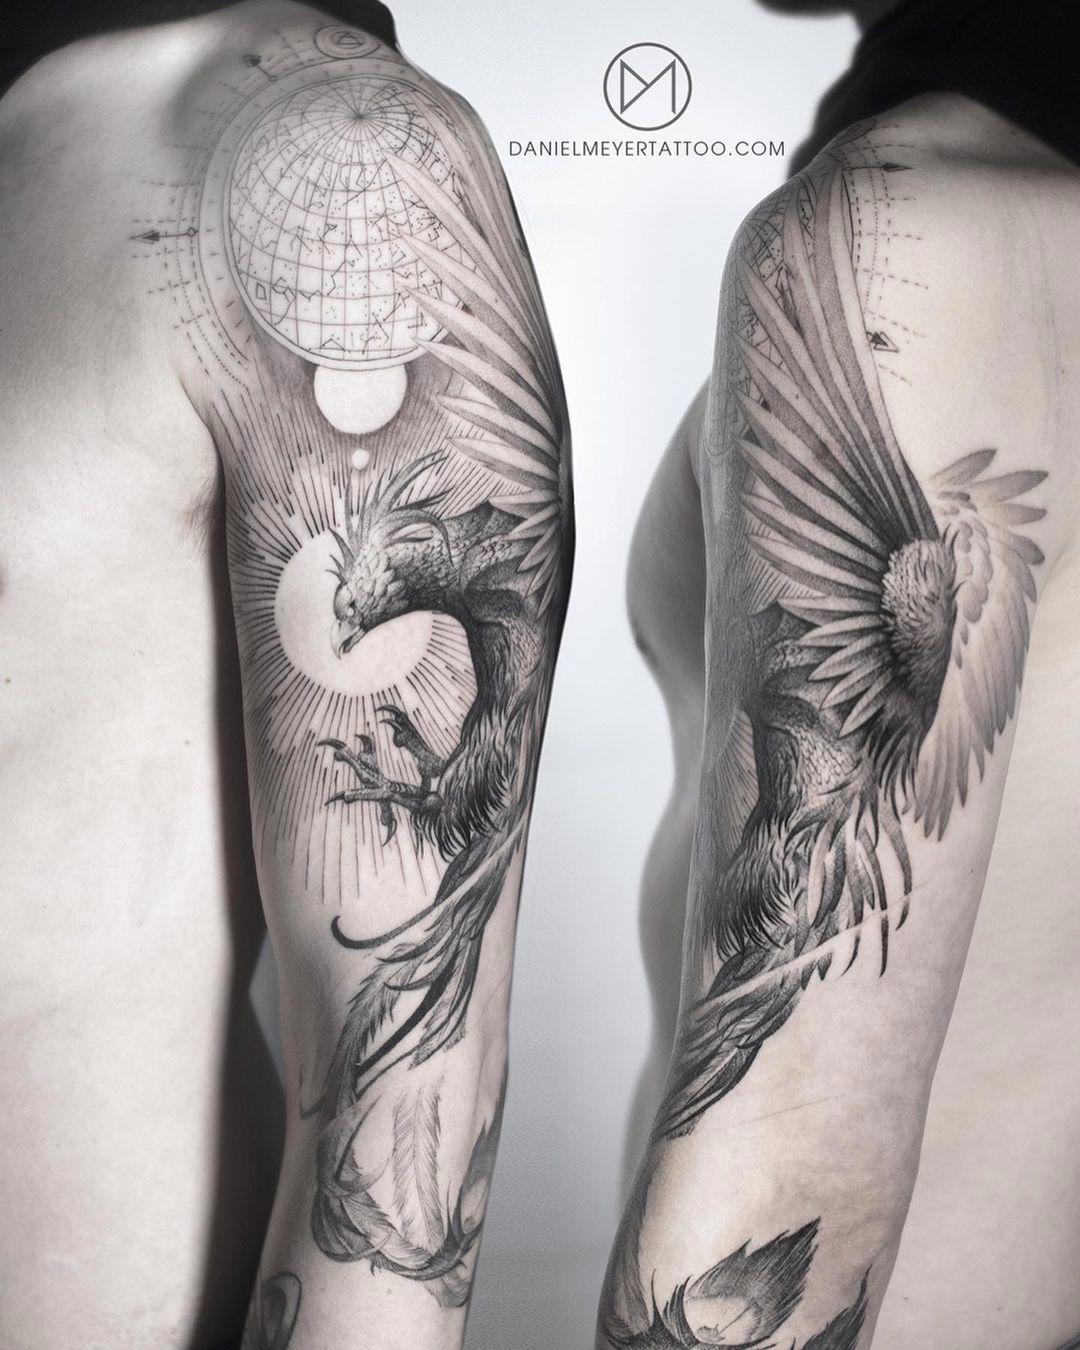 Un tattoo en el brazo cargado de detalles